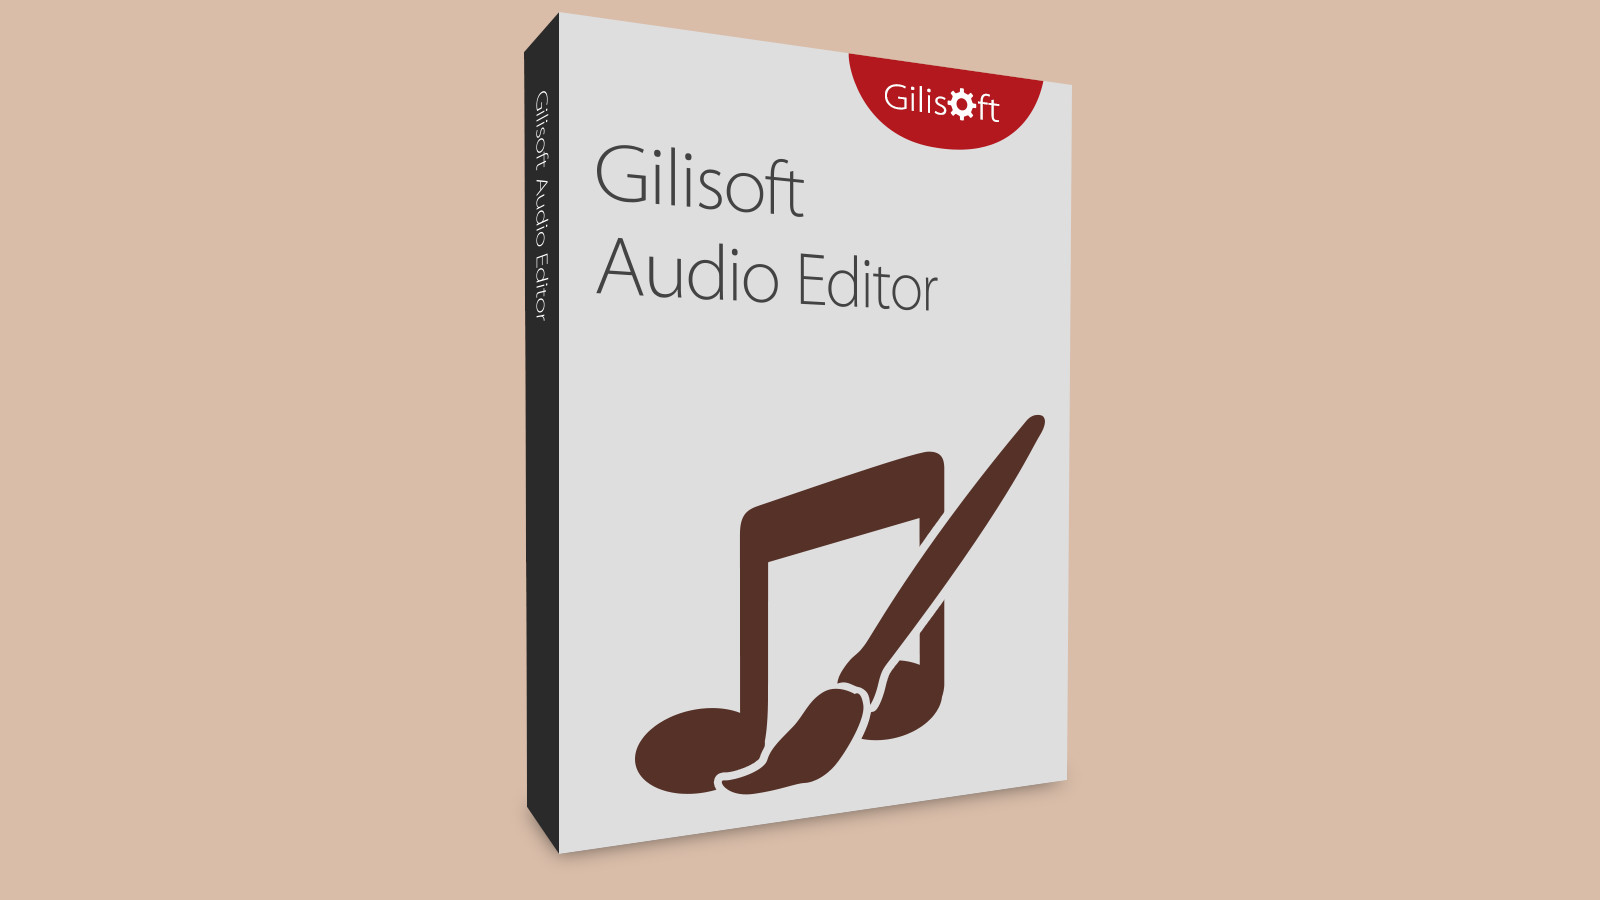 Gilisoft Audio Editor CD Key, 16.5 usd